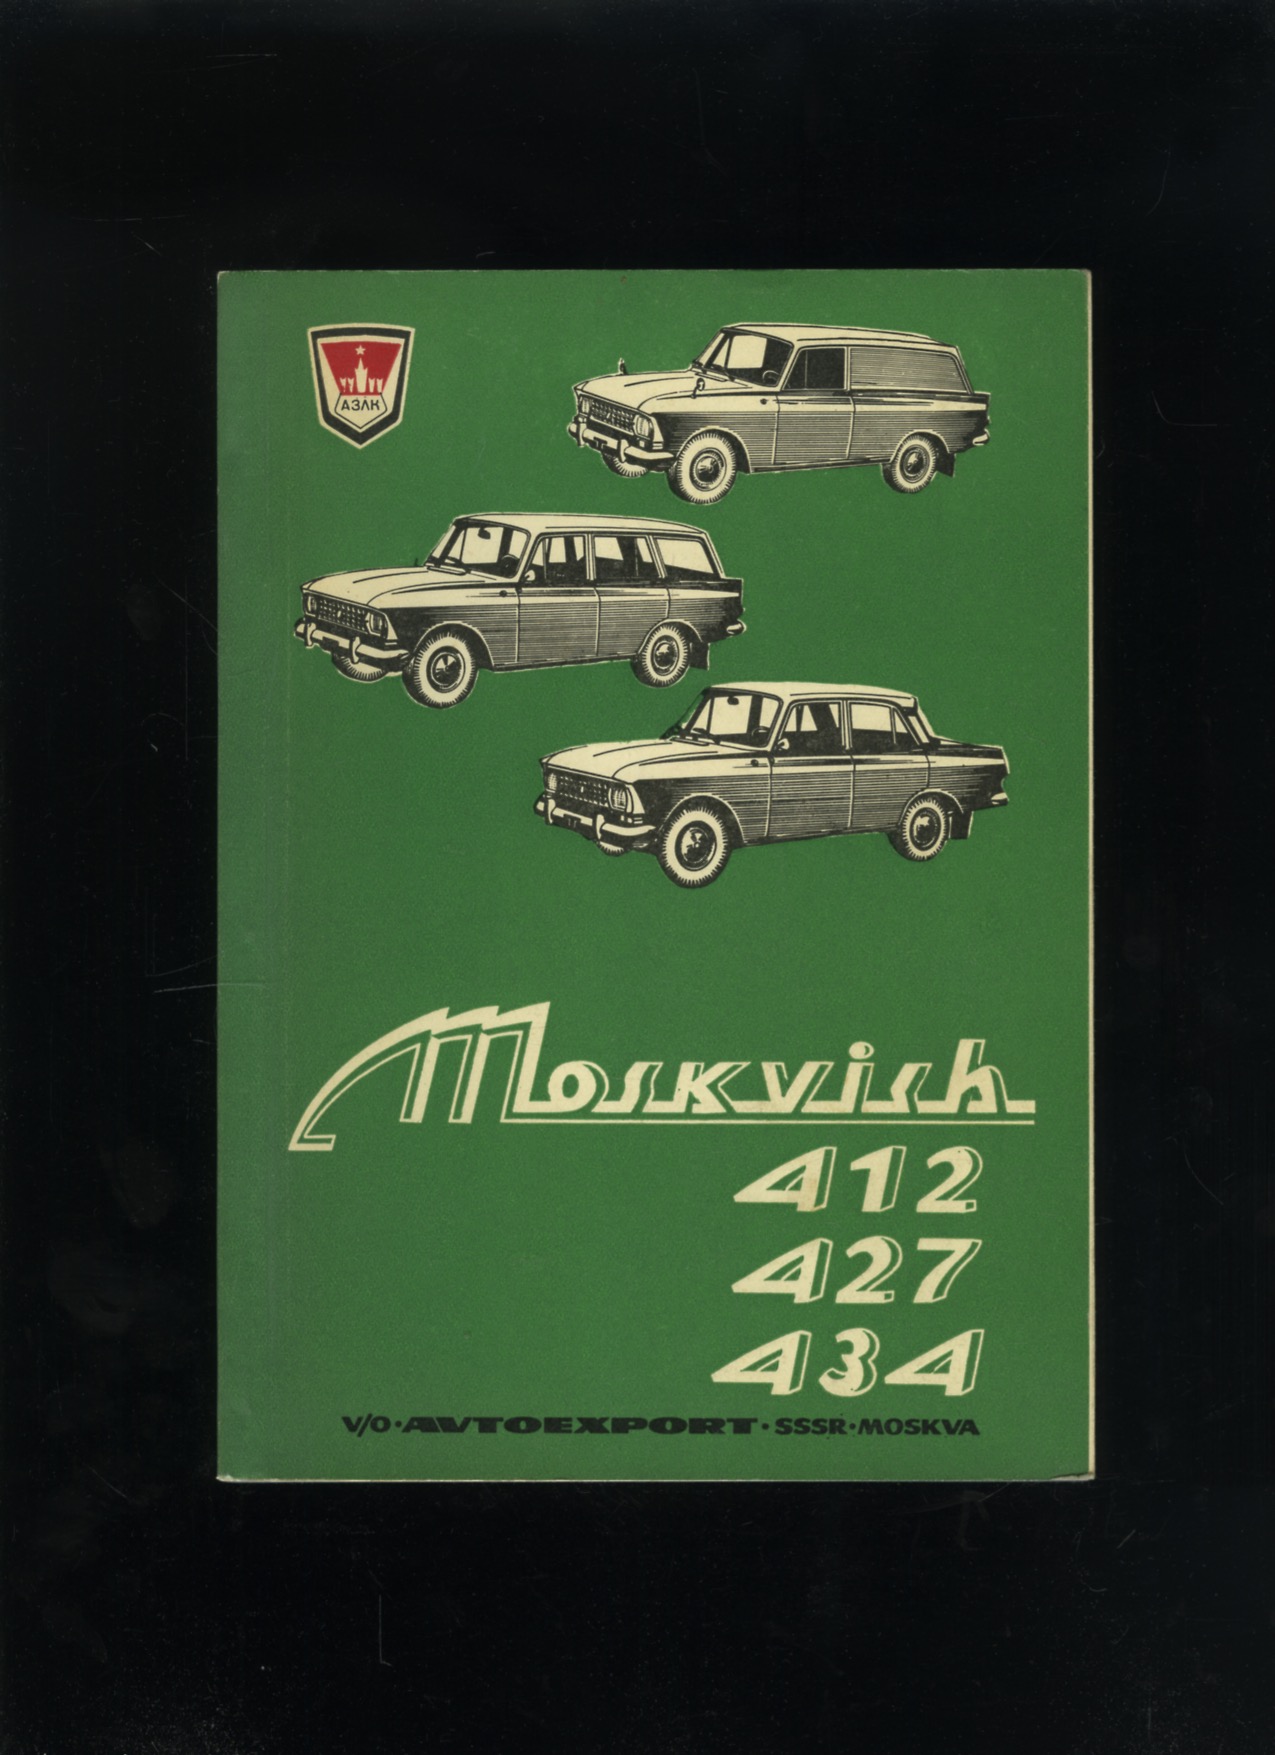 Moskvich 412, 427, 434